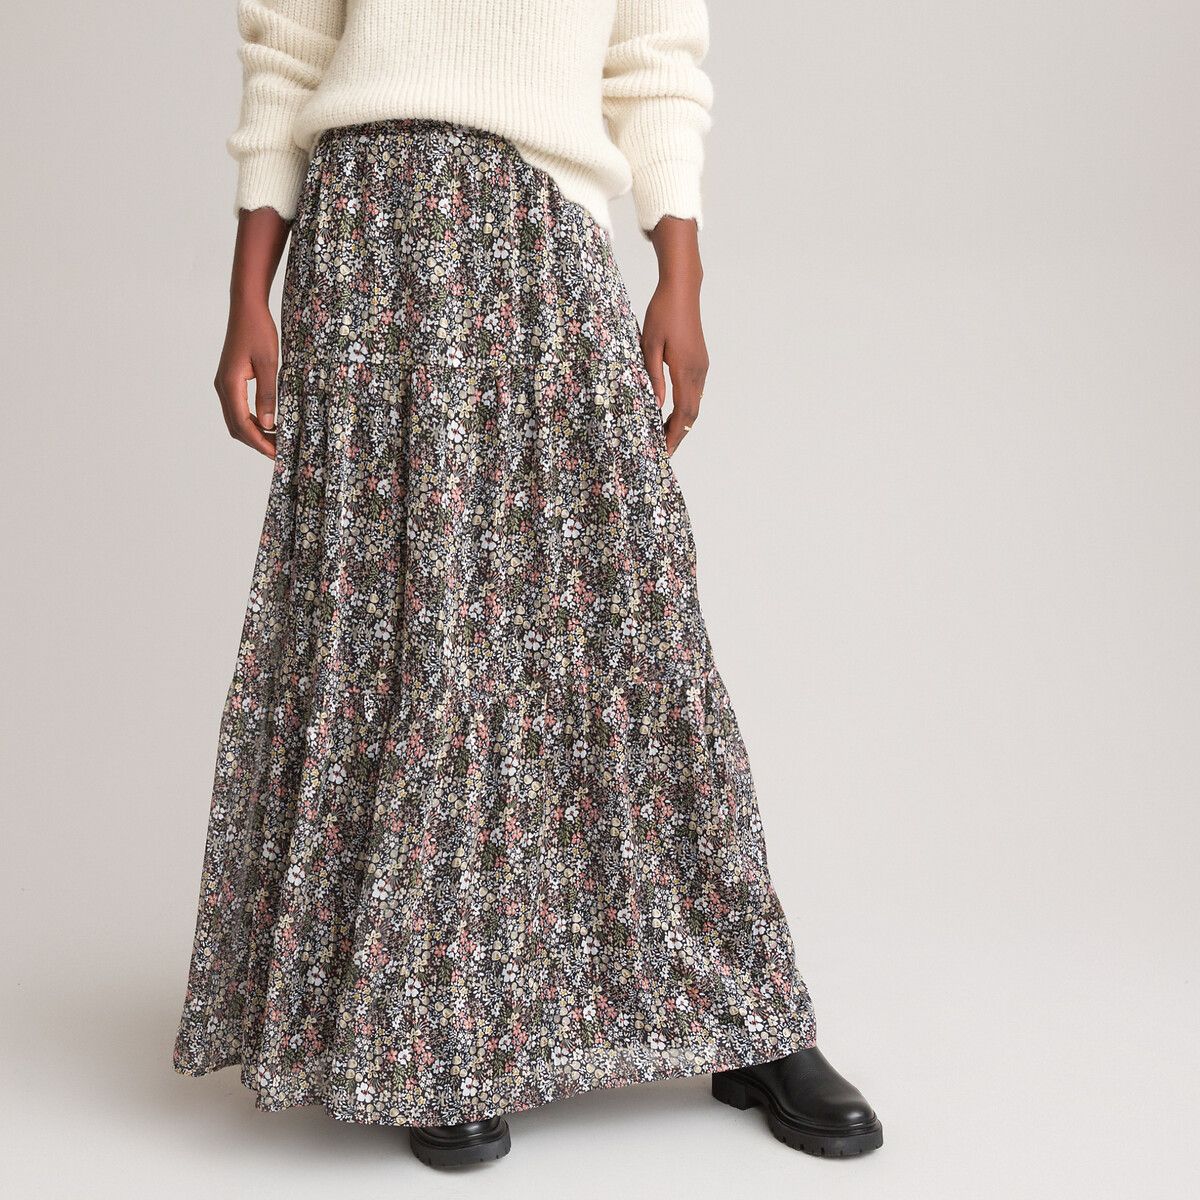 Ruffled Maxi Skirt in Paisley Print | La Redoute (UK)